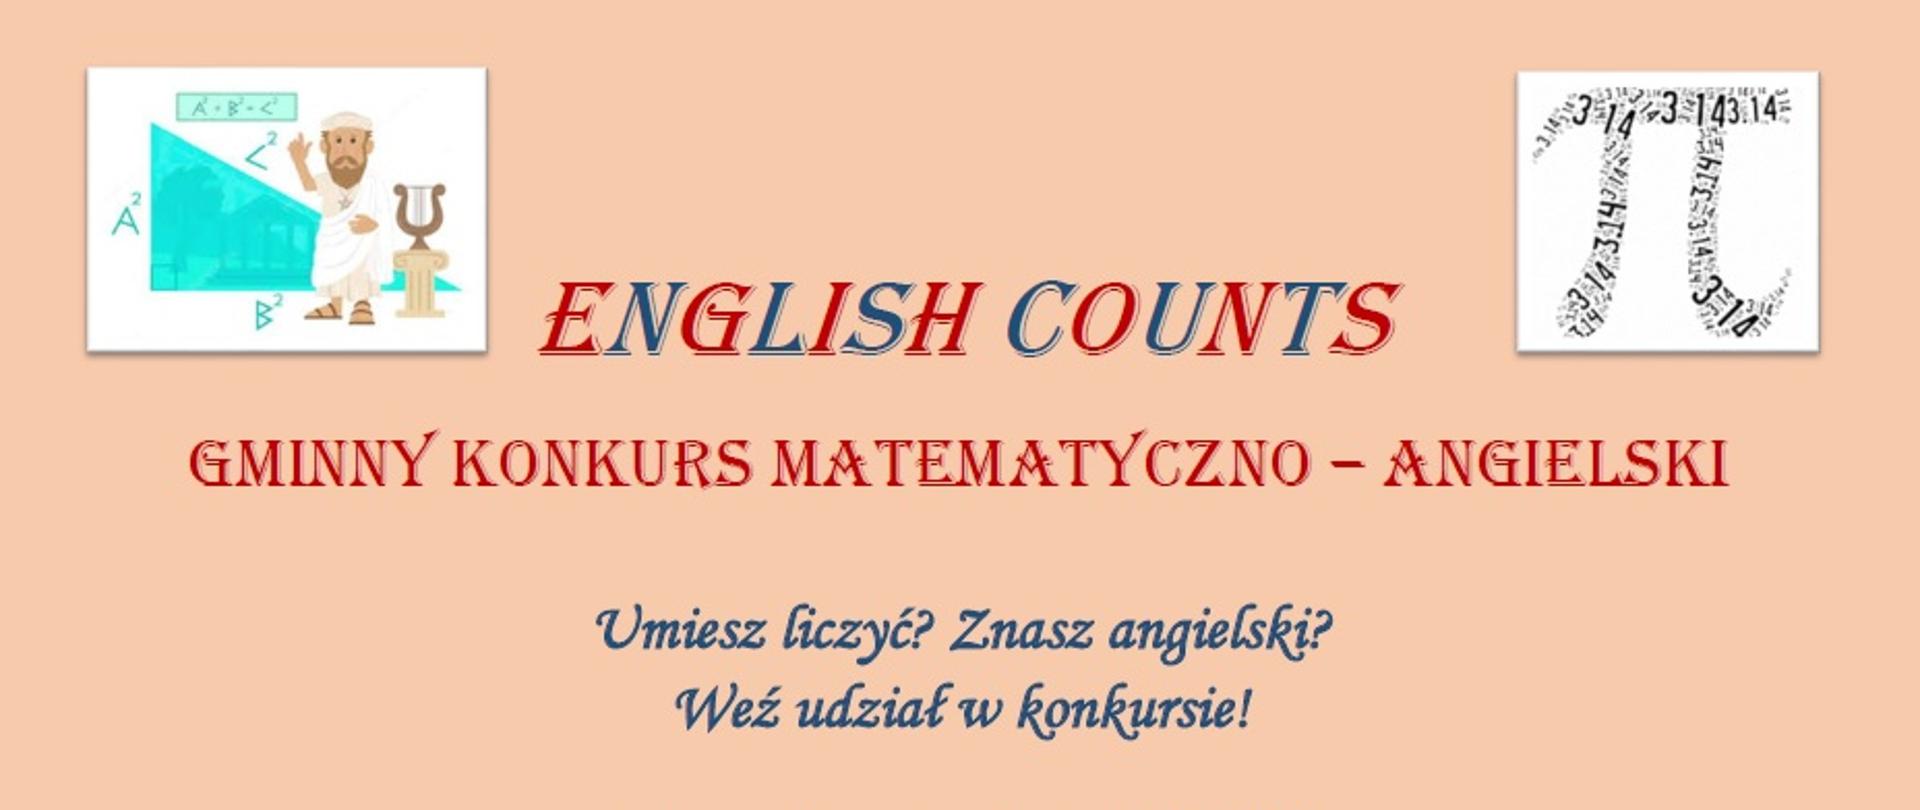 English counts